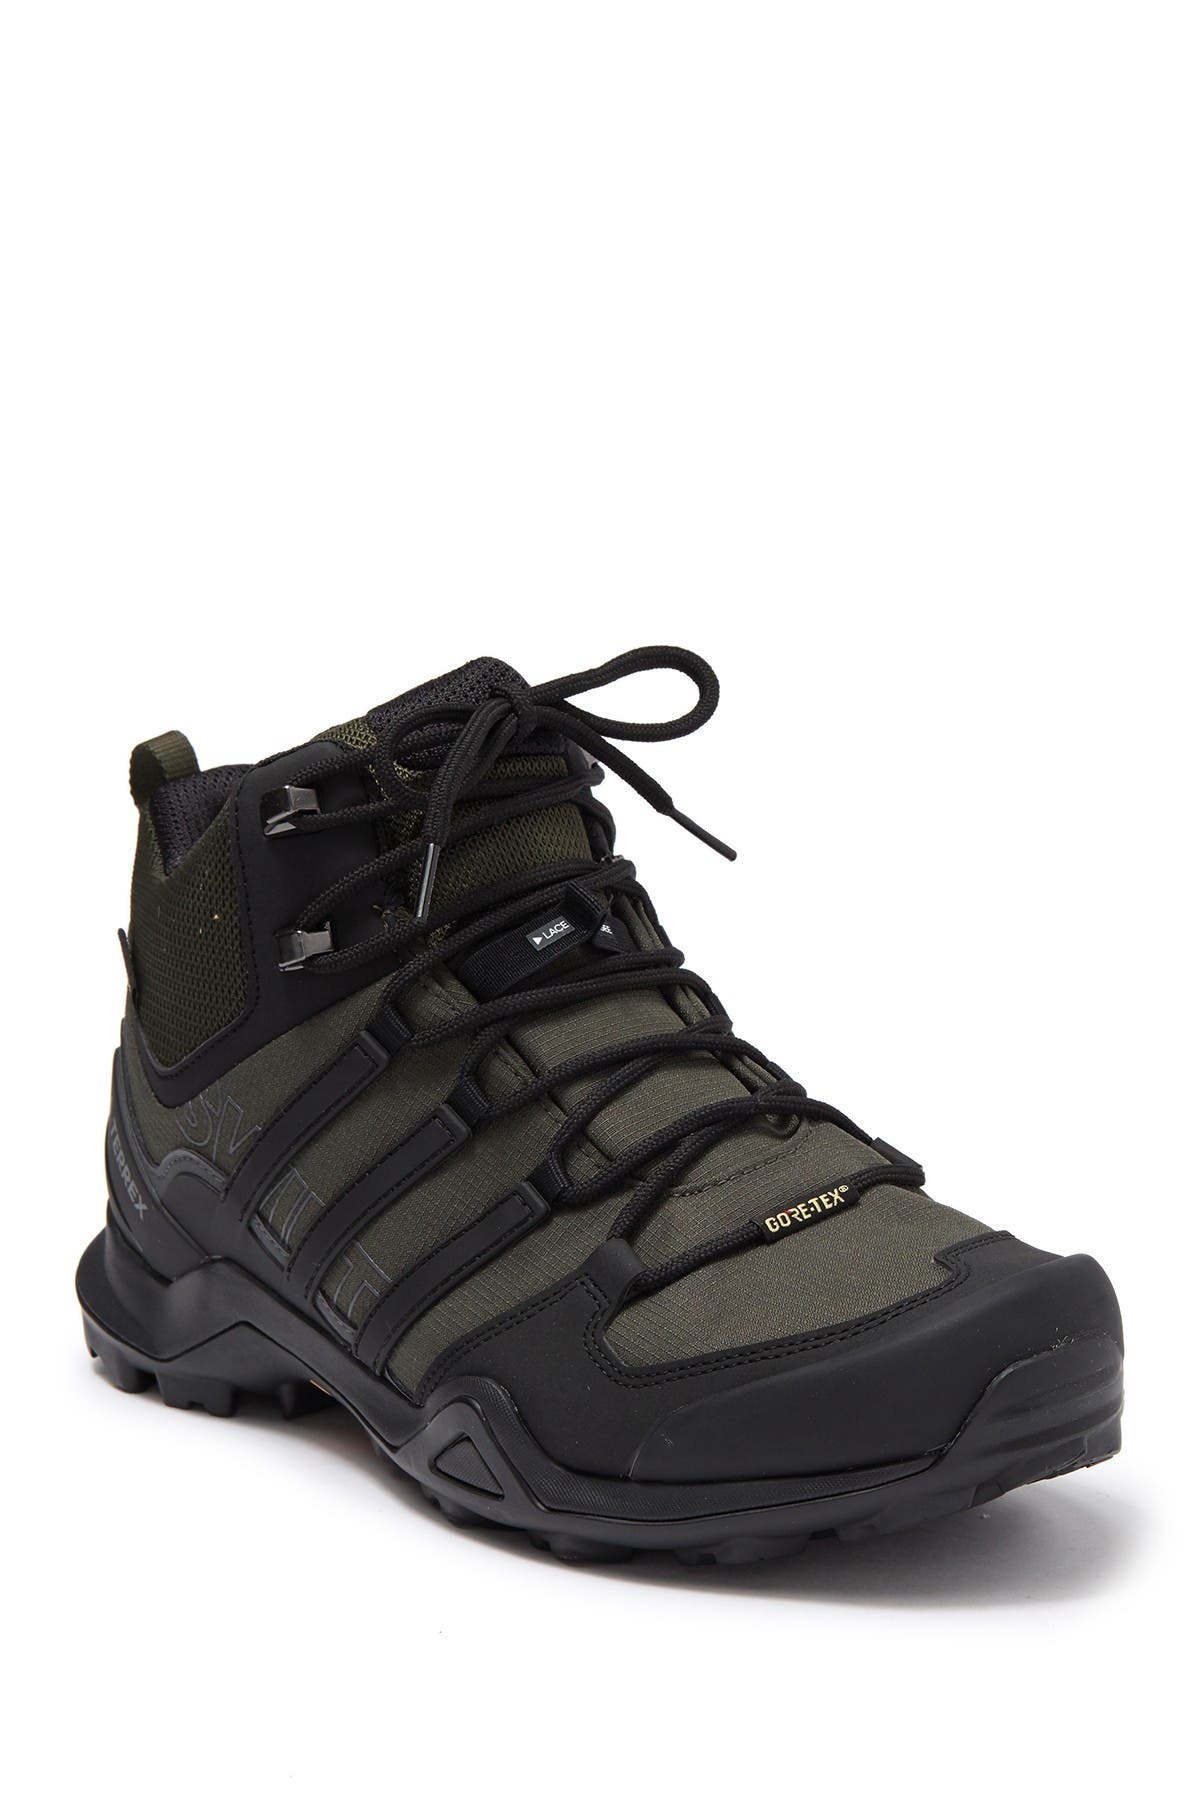 adidas outdoor terrex swift r2 mid gtx hiking shoe